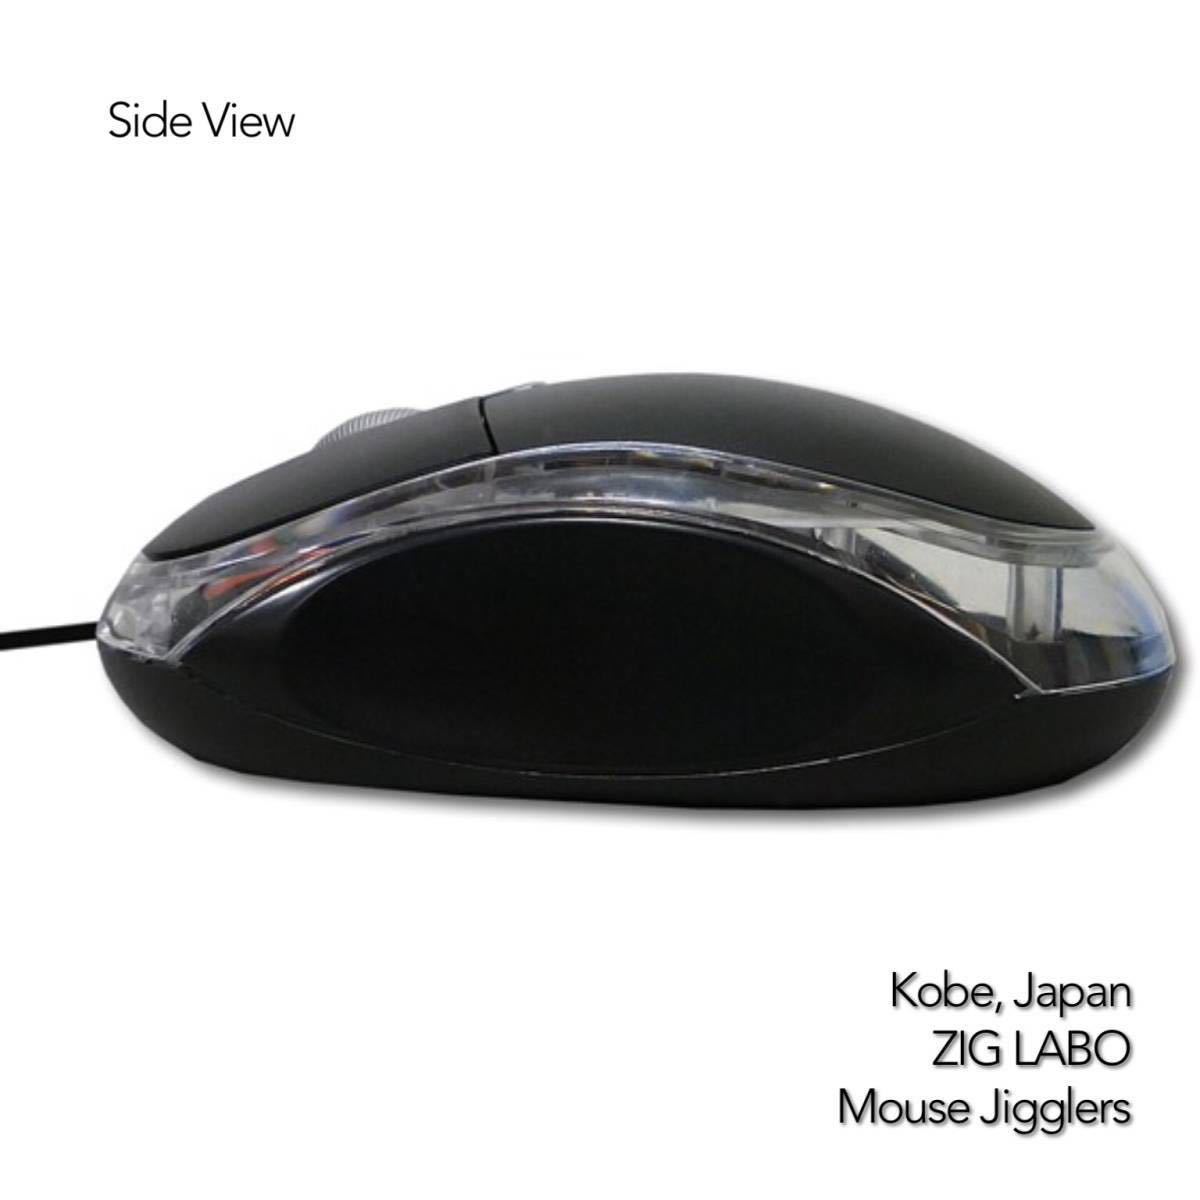 USBマウス 有線 光学式 USB Wired Optical Mouse #3 在宅勤務 テレワーク リモートワーク 遠隔授業 リモート授業_画像3